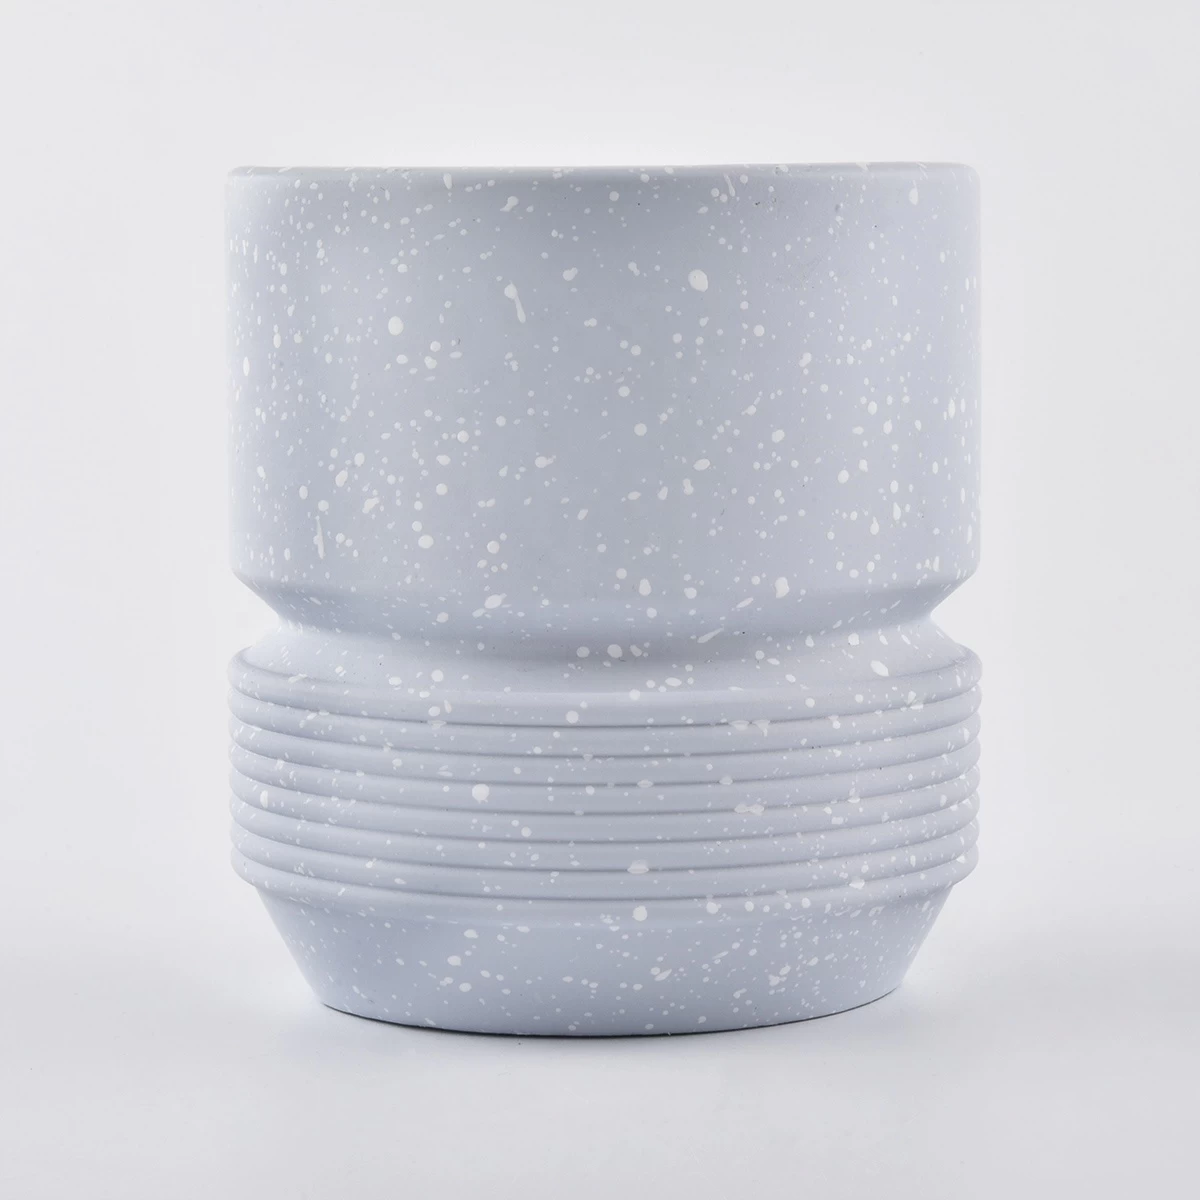 light blue concrete candle jars with white spots